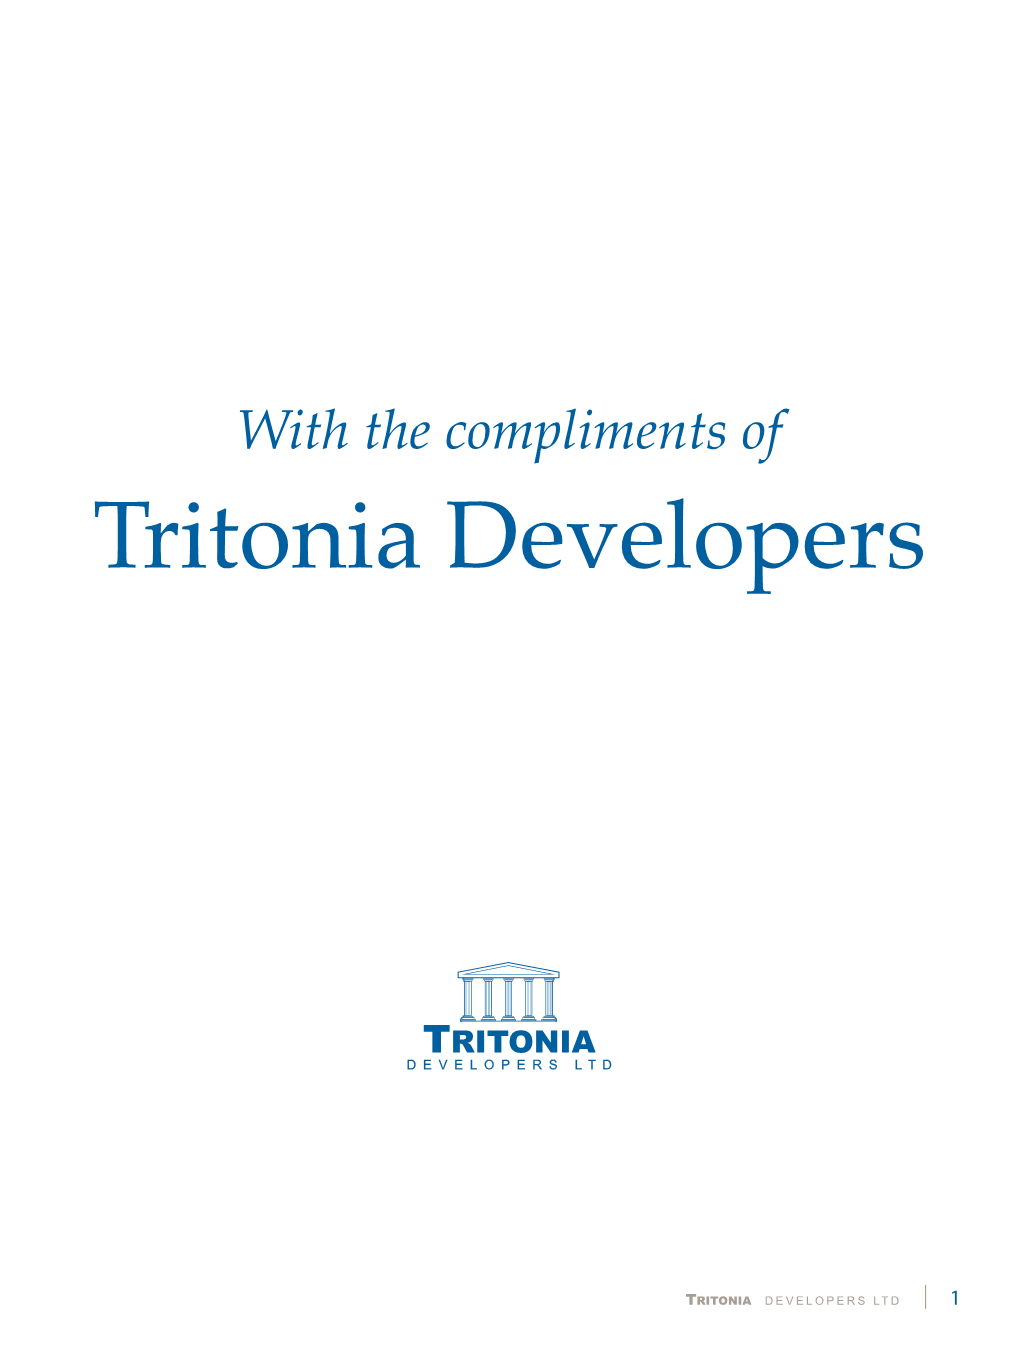 Tritonia Developers